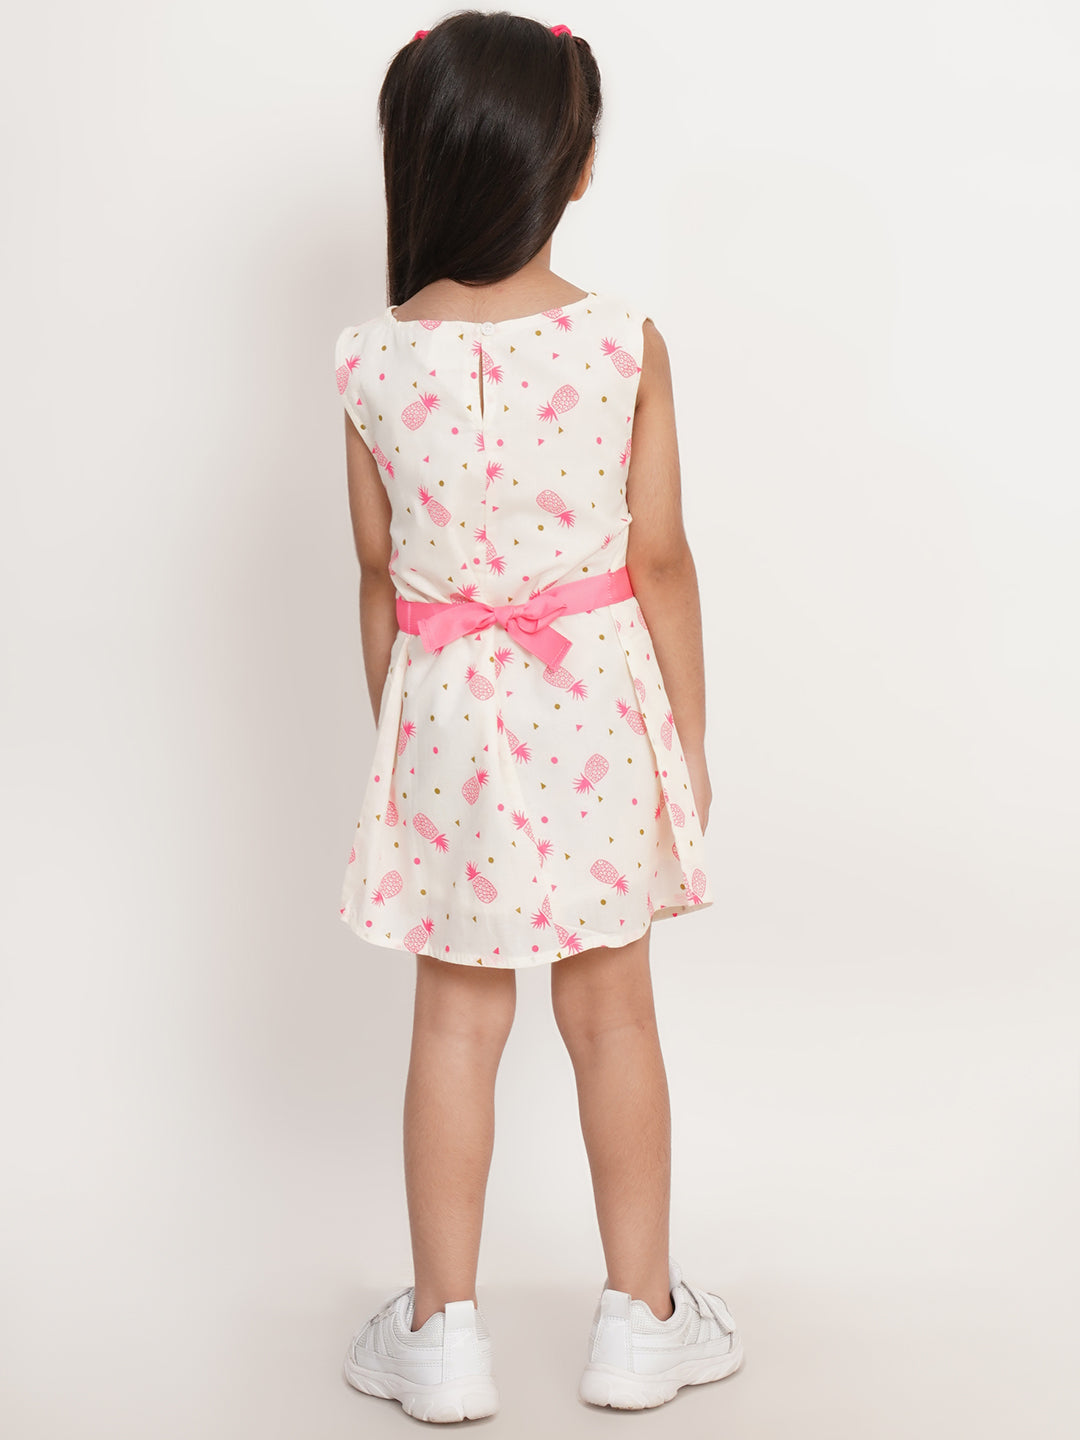 CREATIVE KID'S Girl White & Pink Fruit Print A-Line Cotton Dress